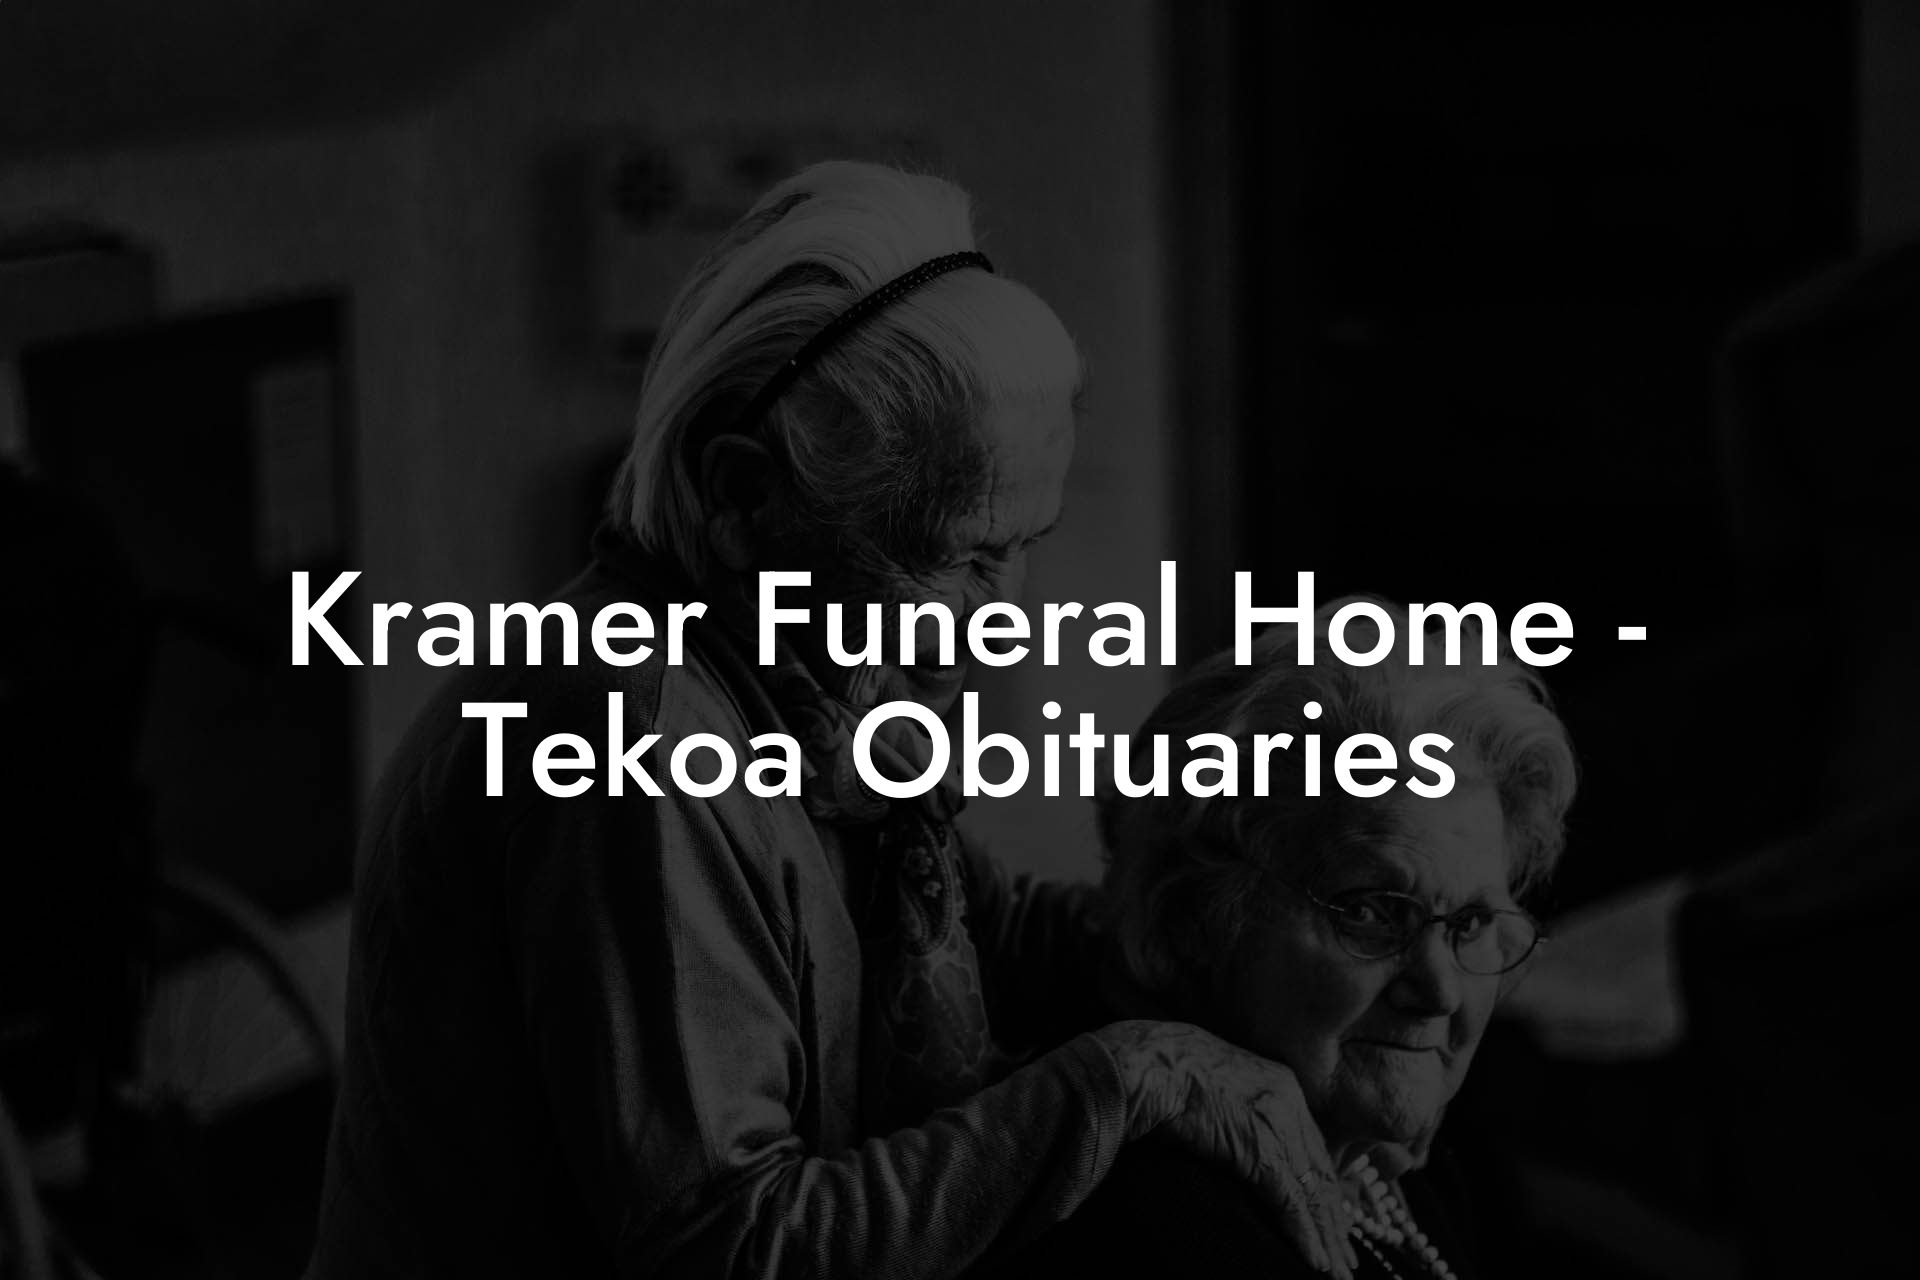 Kramer Funeral Home - Tekoa Obituaries